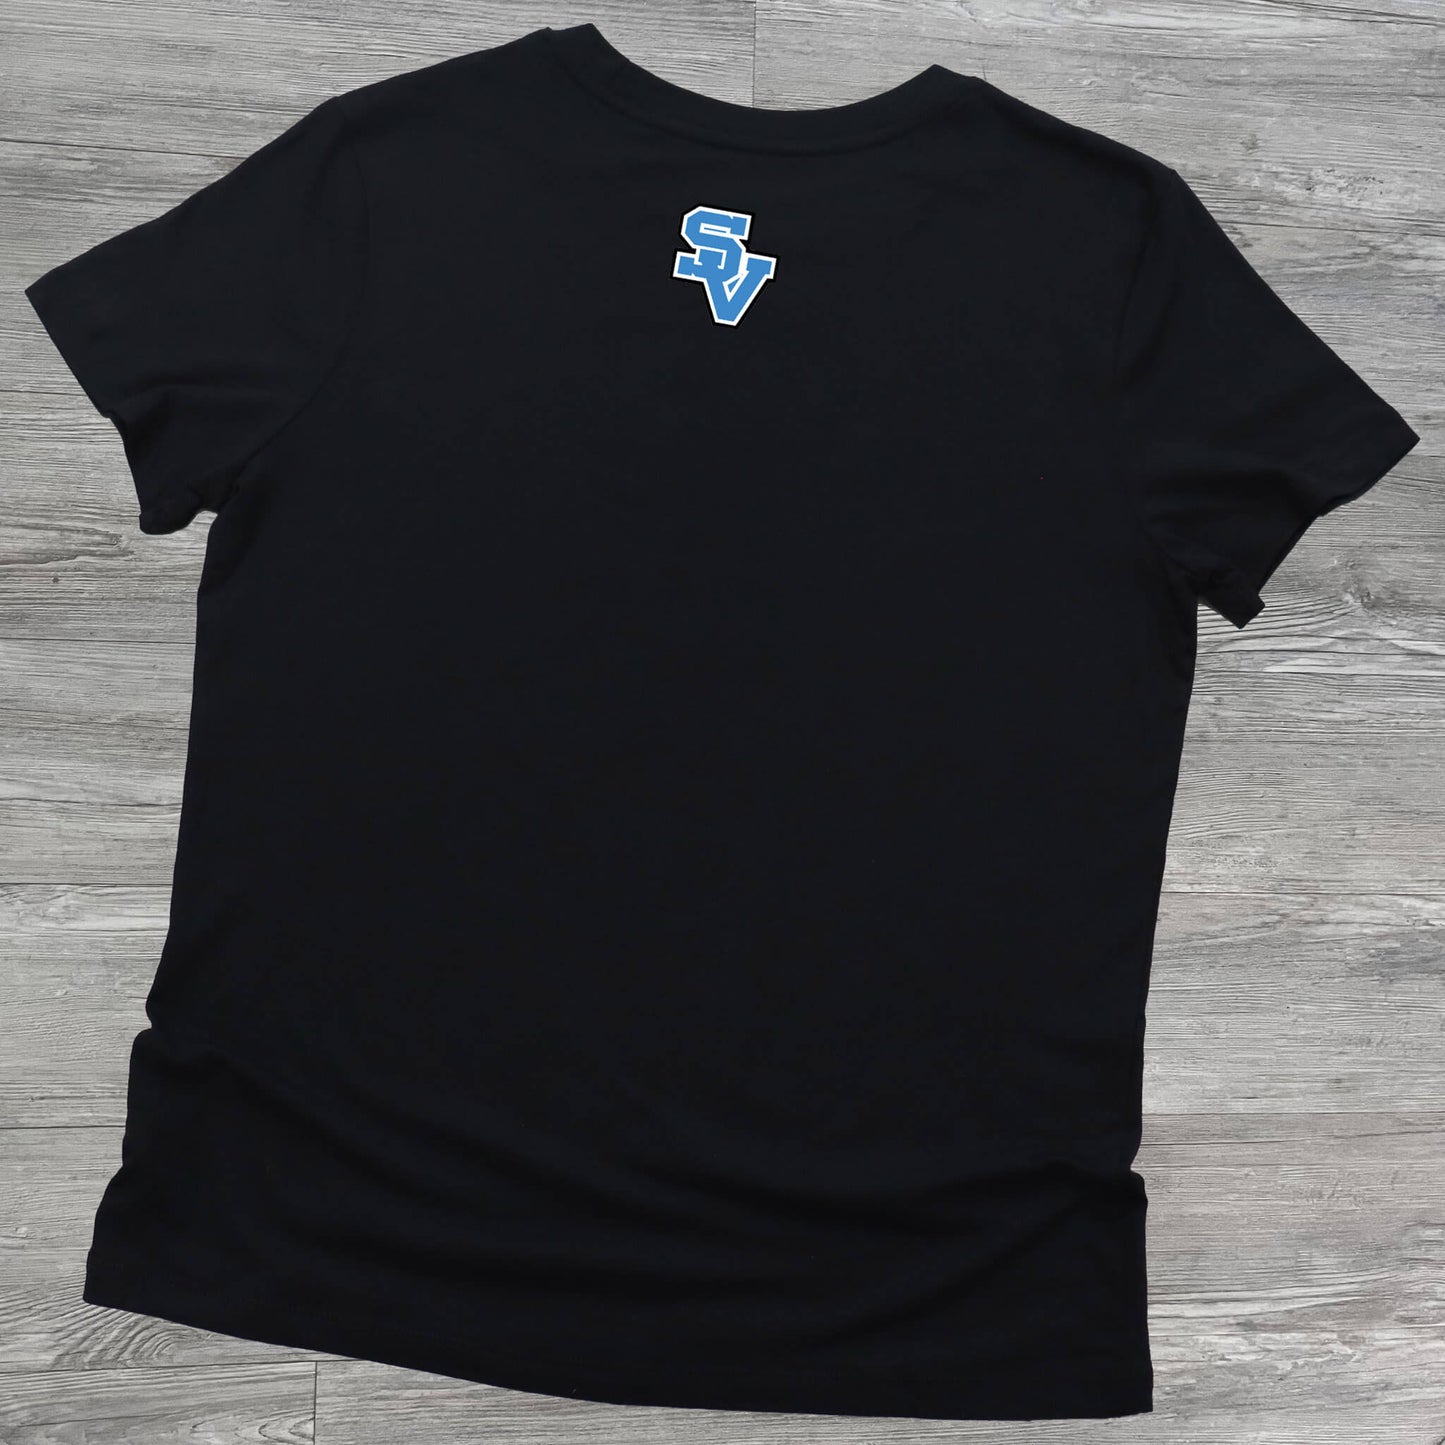 Black Ehrman Crest Elementary tshirt back with SV logo